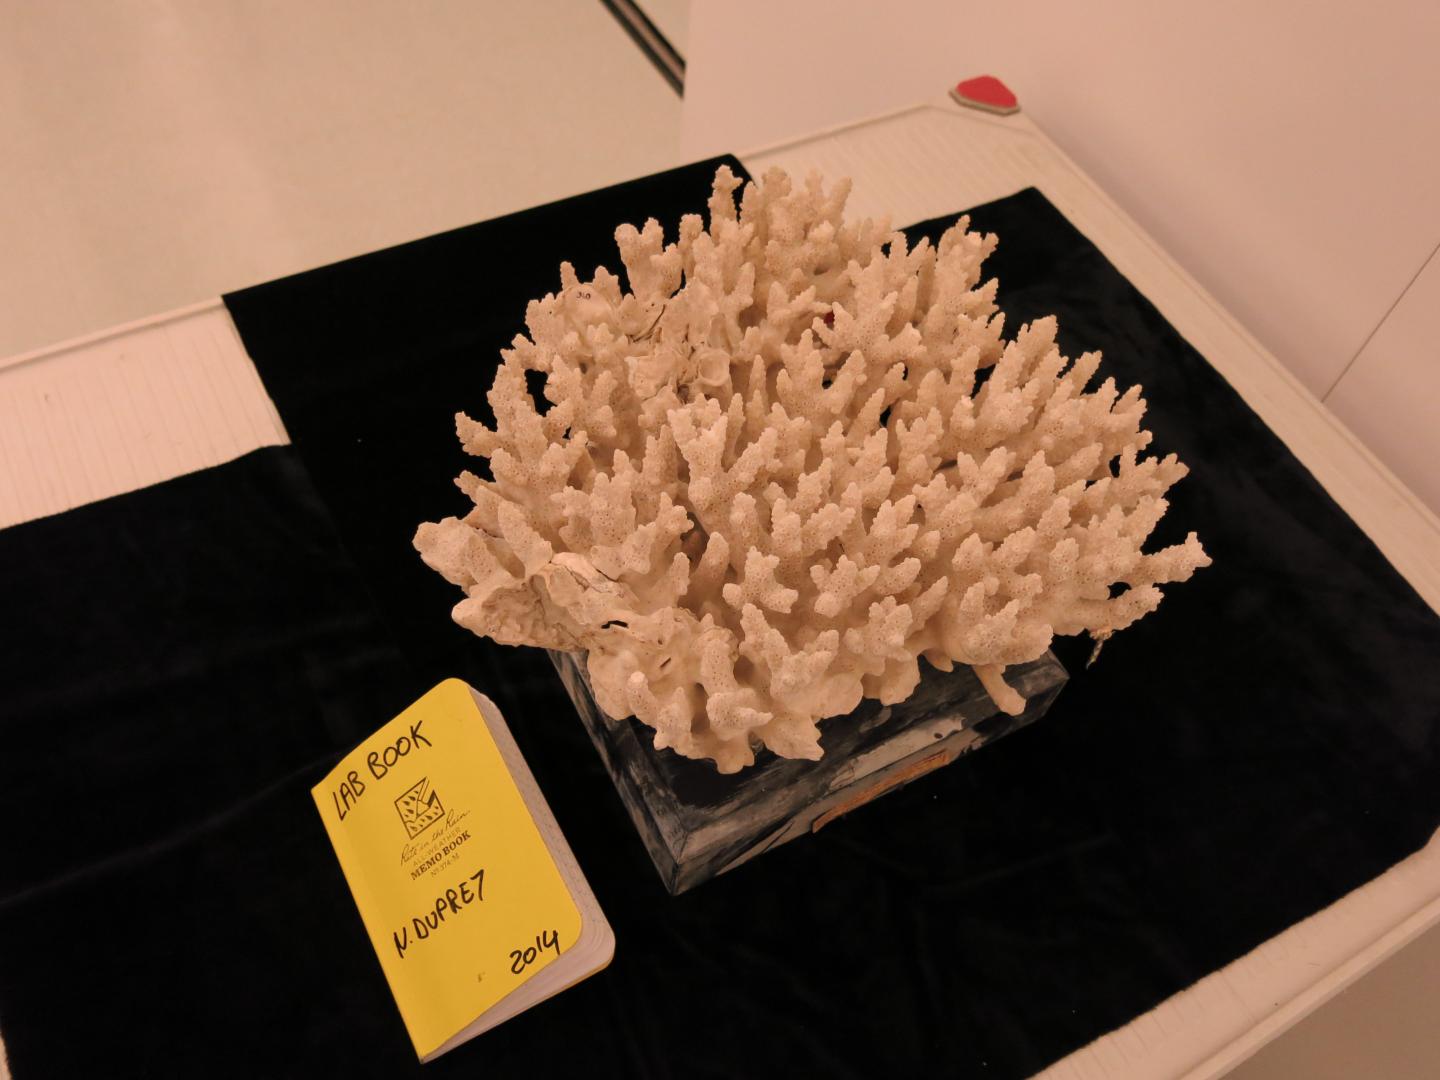 Coral Specimen [IMAGE]  EurekAlert! Science News Releases